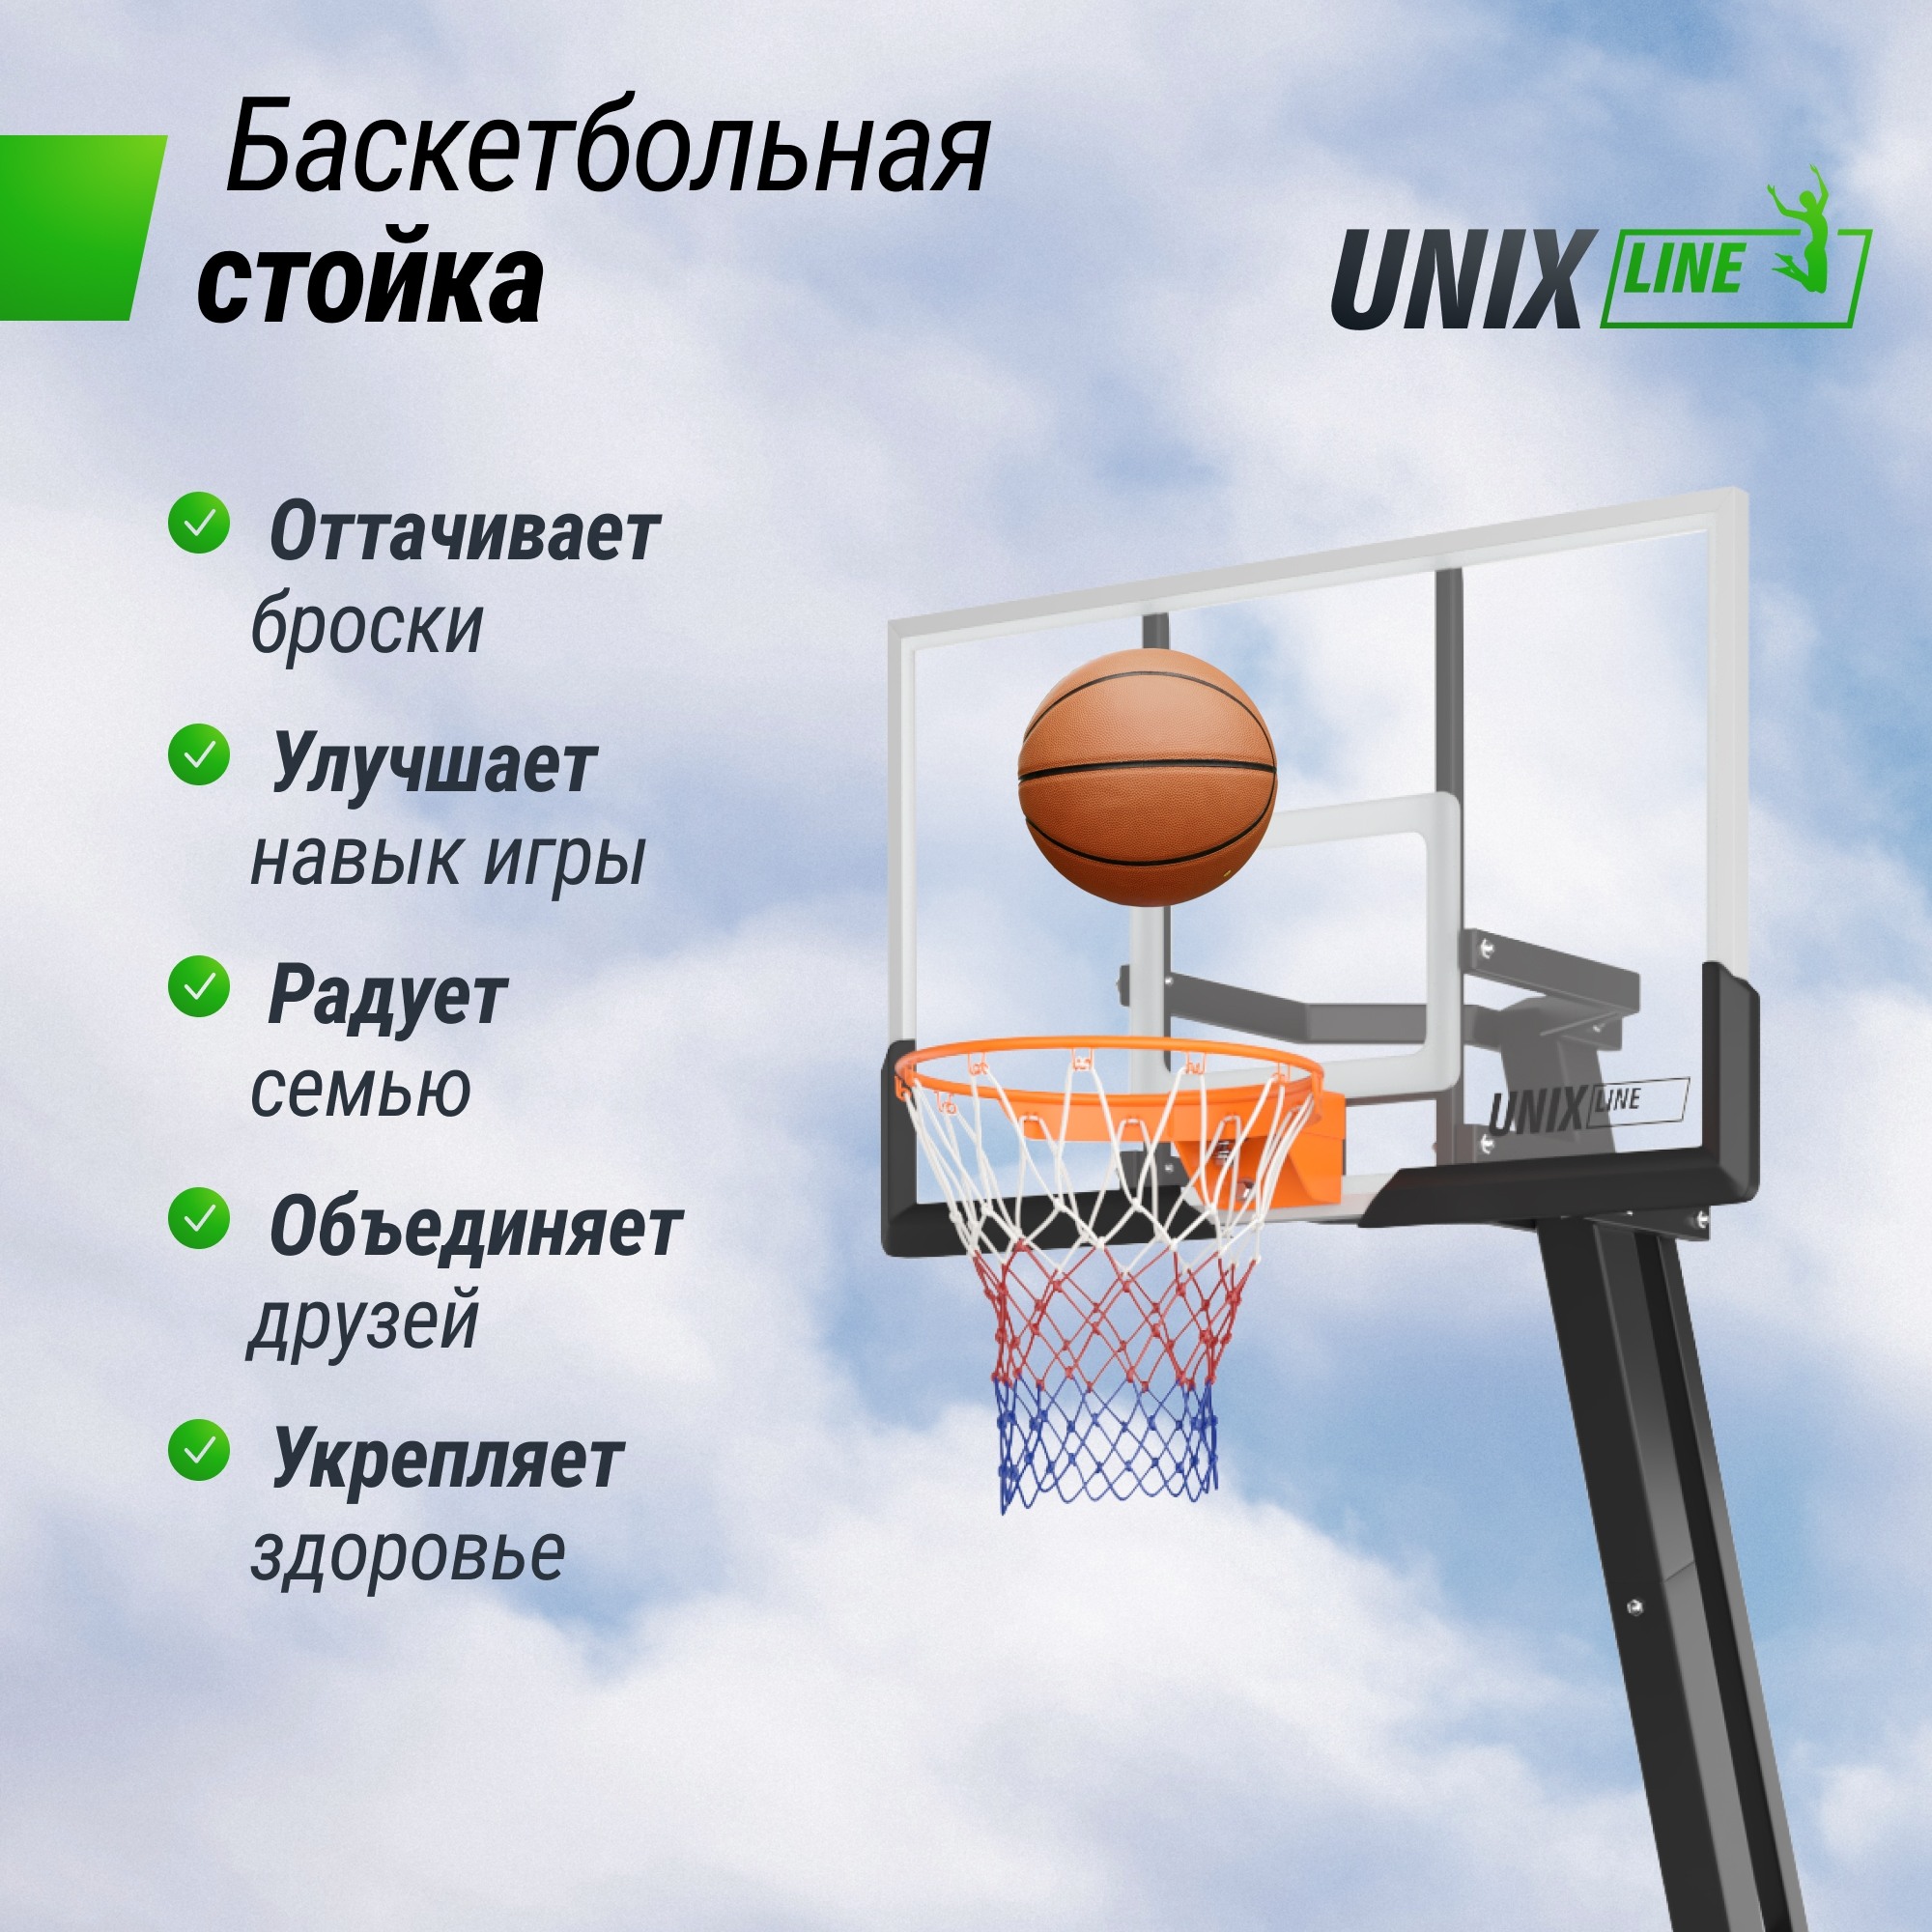 Баскетбольная стойка Unix Line B-Stand-PC 54x32" R45 H230-305см BSTS305_54PCBK 2000_2000